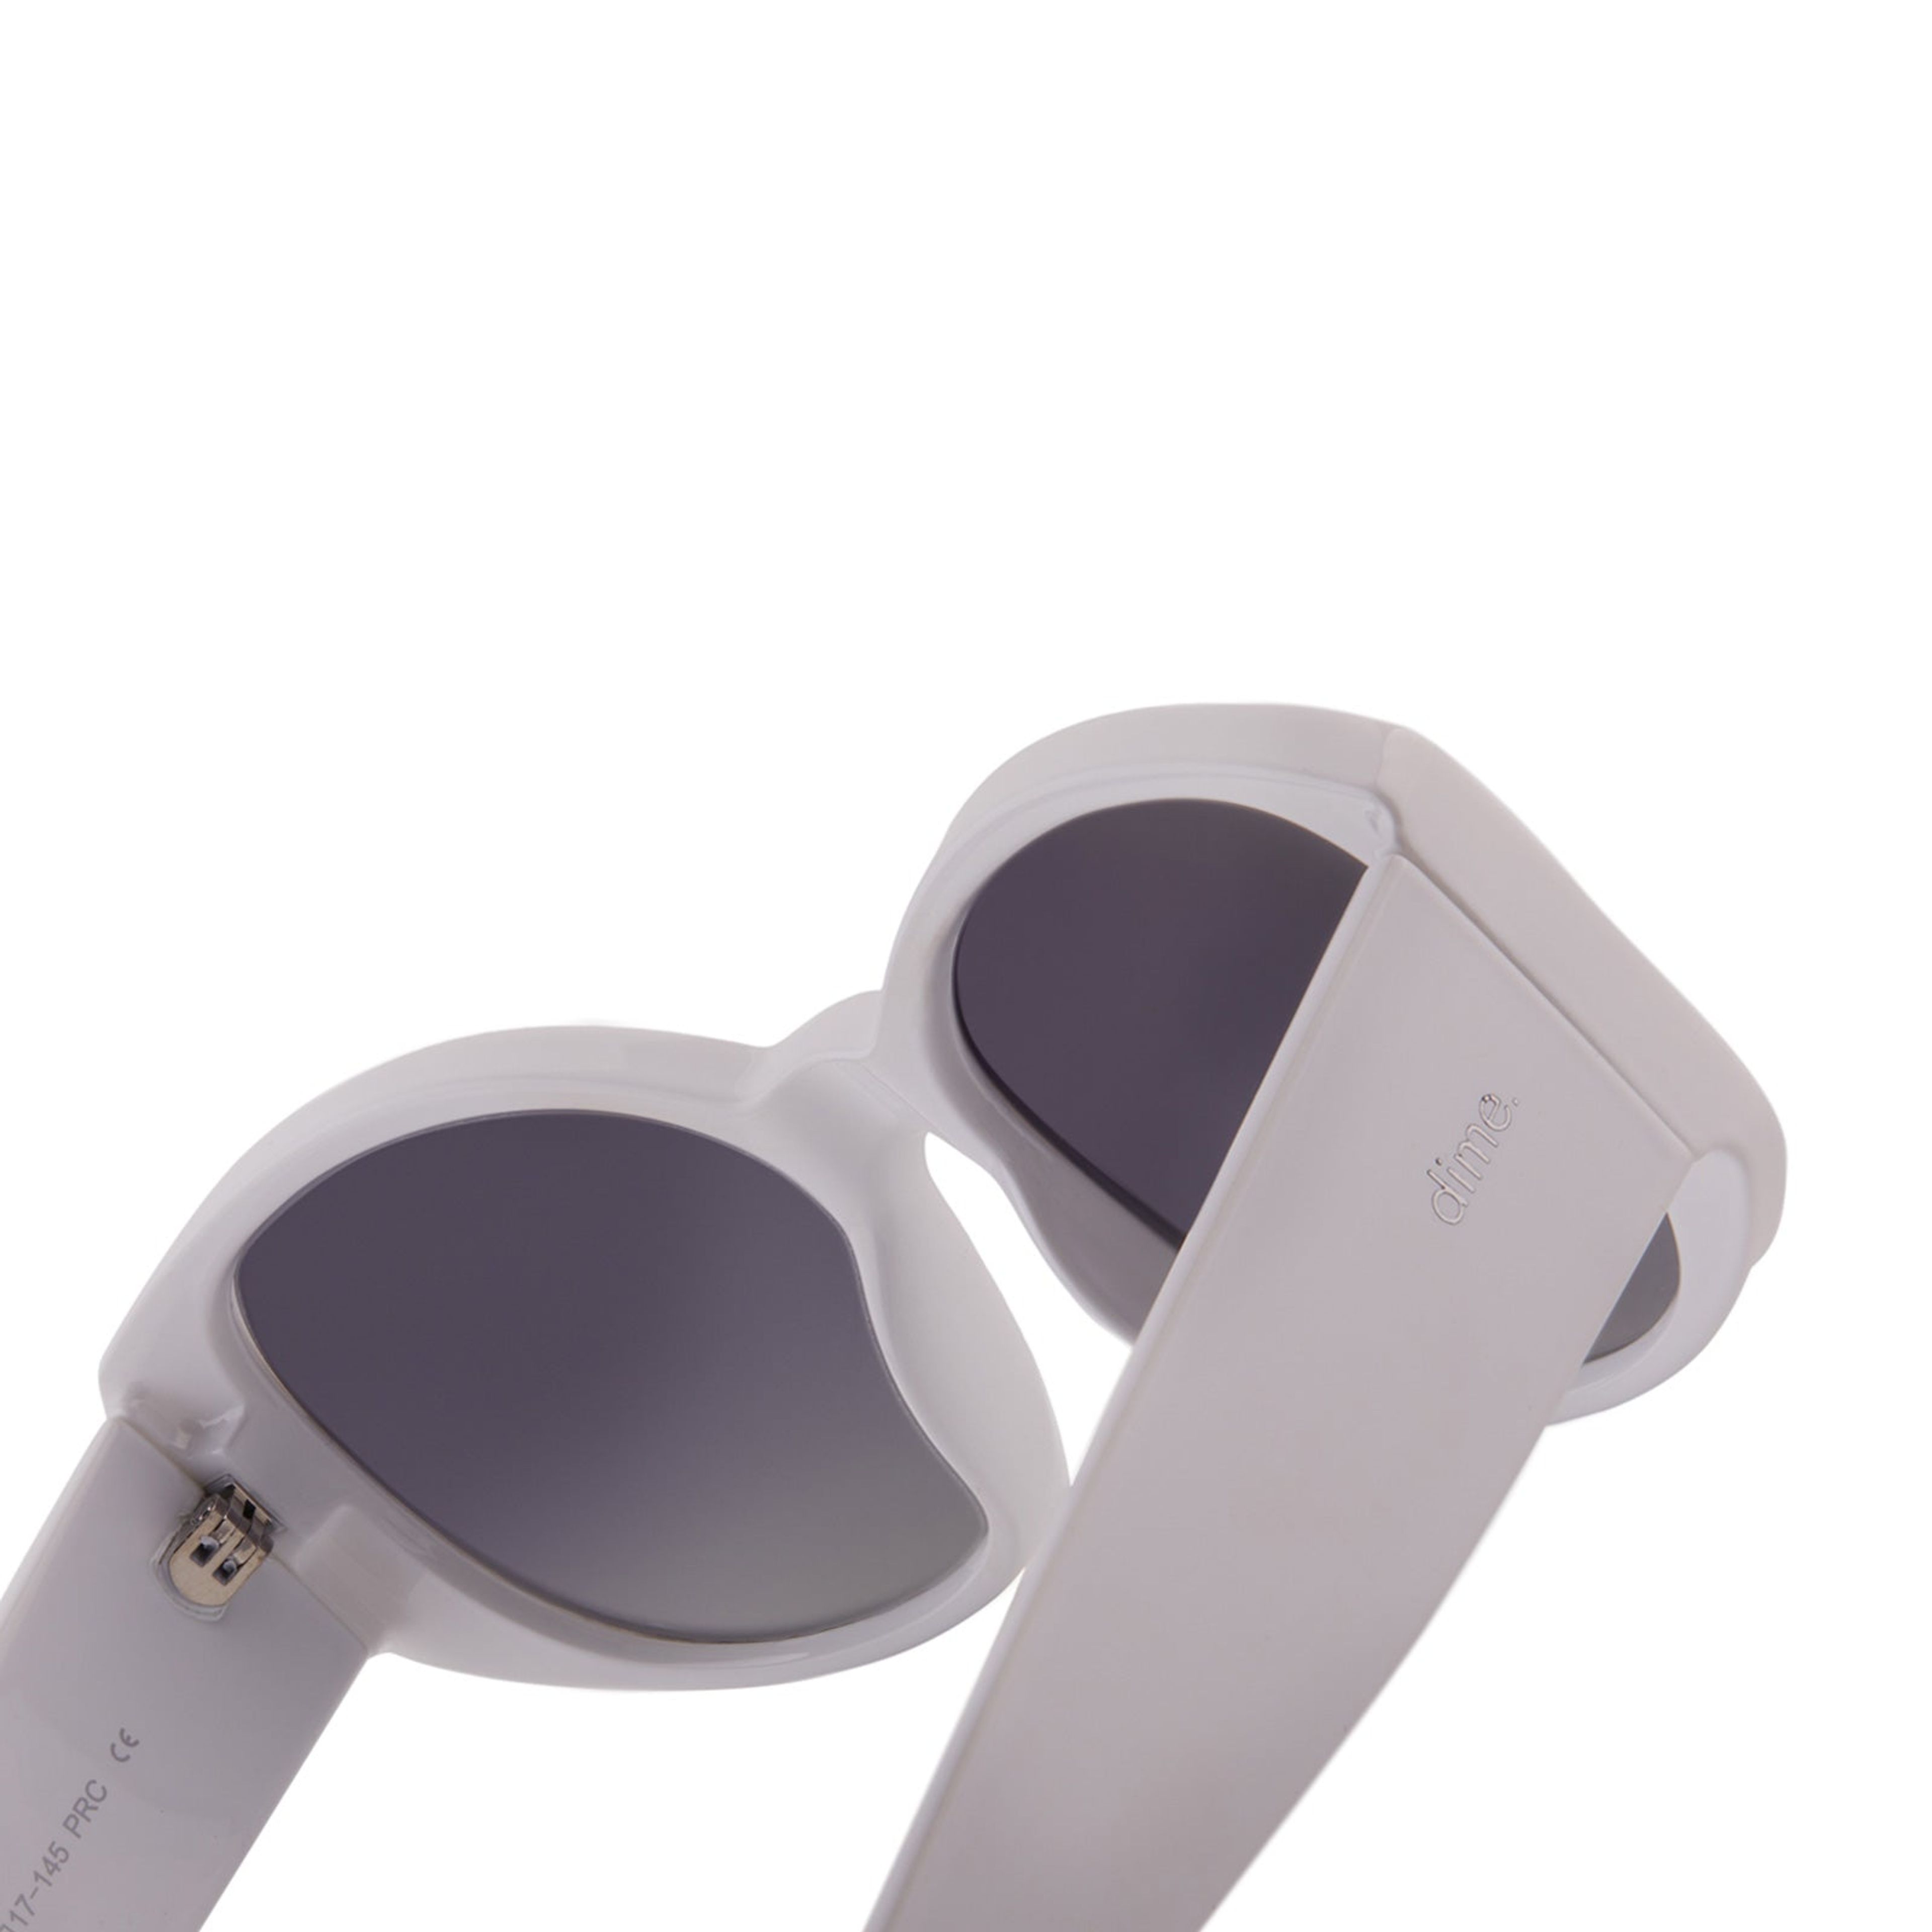 powerhouse - white + grey gradient polarized sunglasses